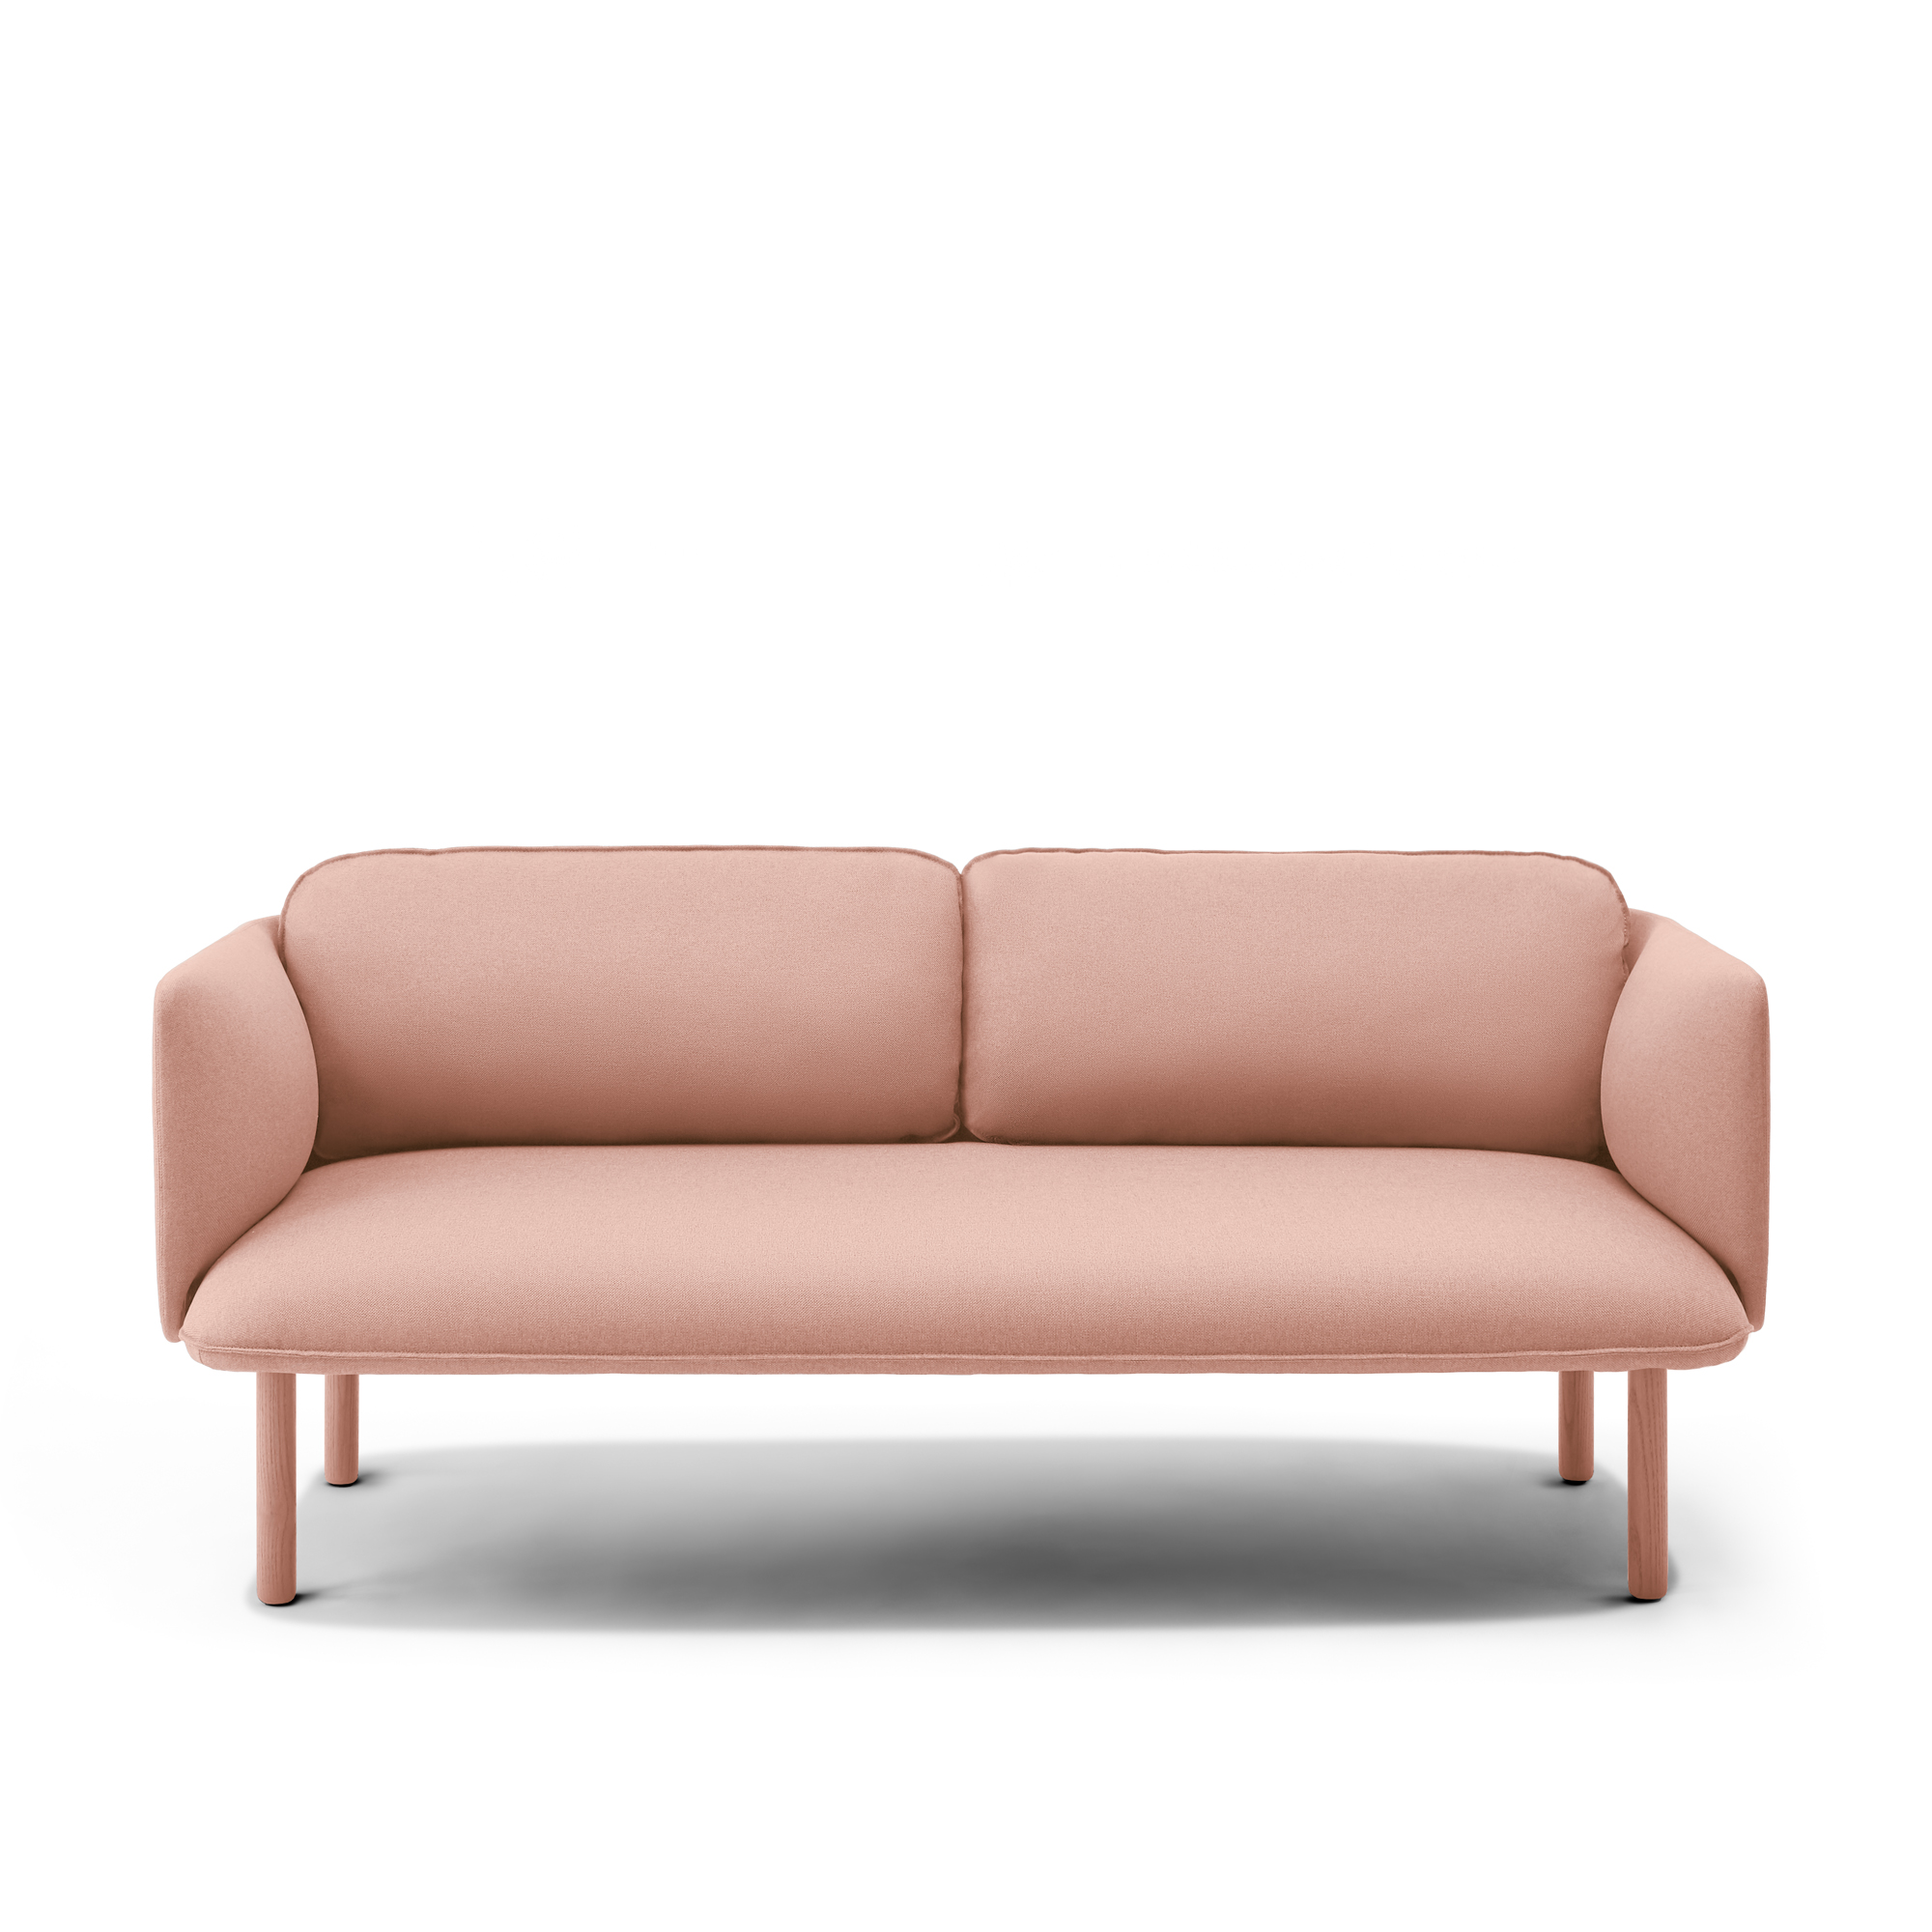 Blush QT Low Lounge Sofa,Blush,hi-res